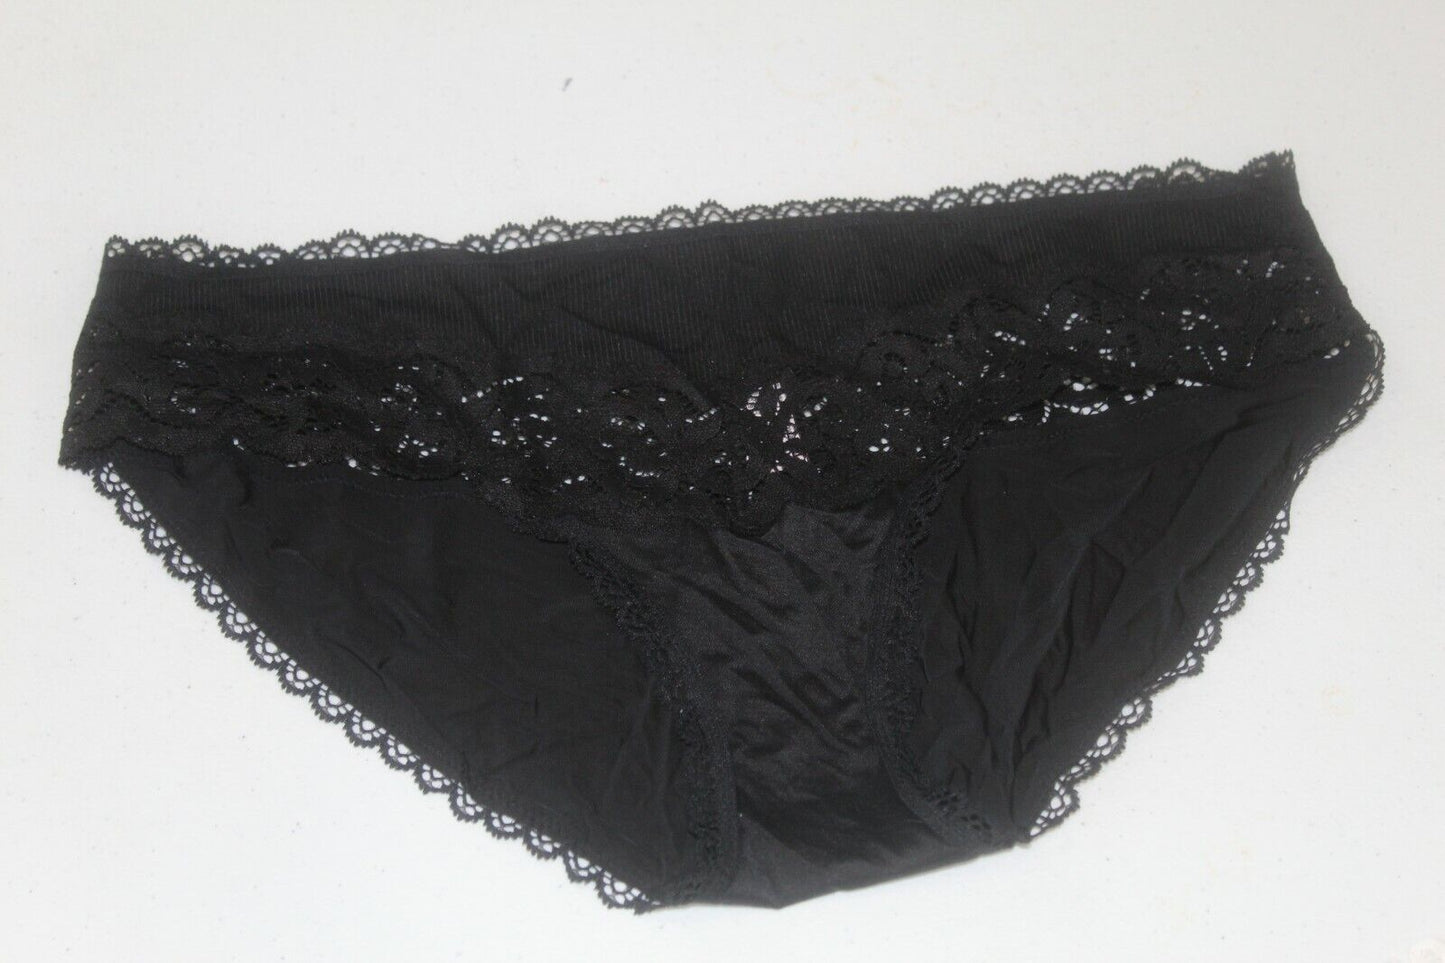 ♡  **NWT**  Lot of Four Random Victoria's Secret Panties Size - Large  ♡